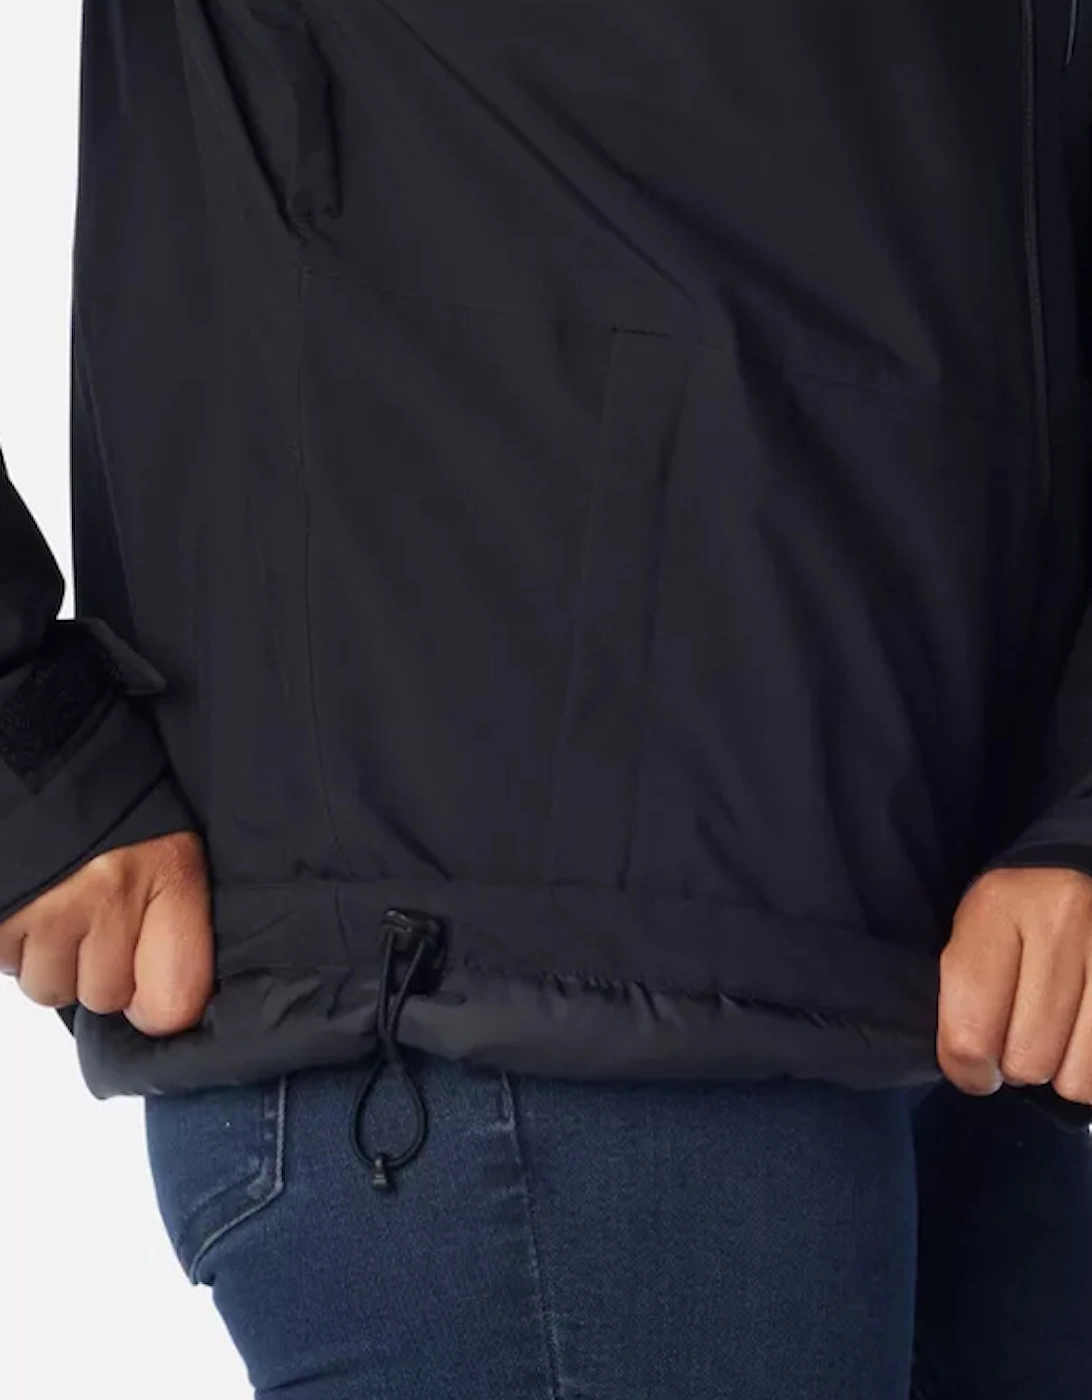 Women's Explorers Edge Insulated Jacket Black